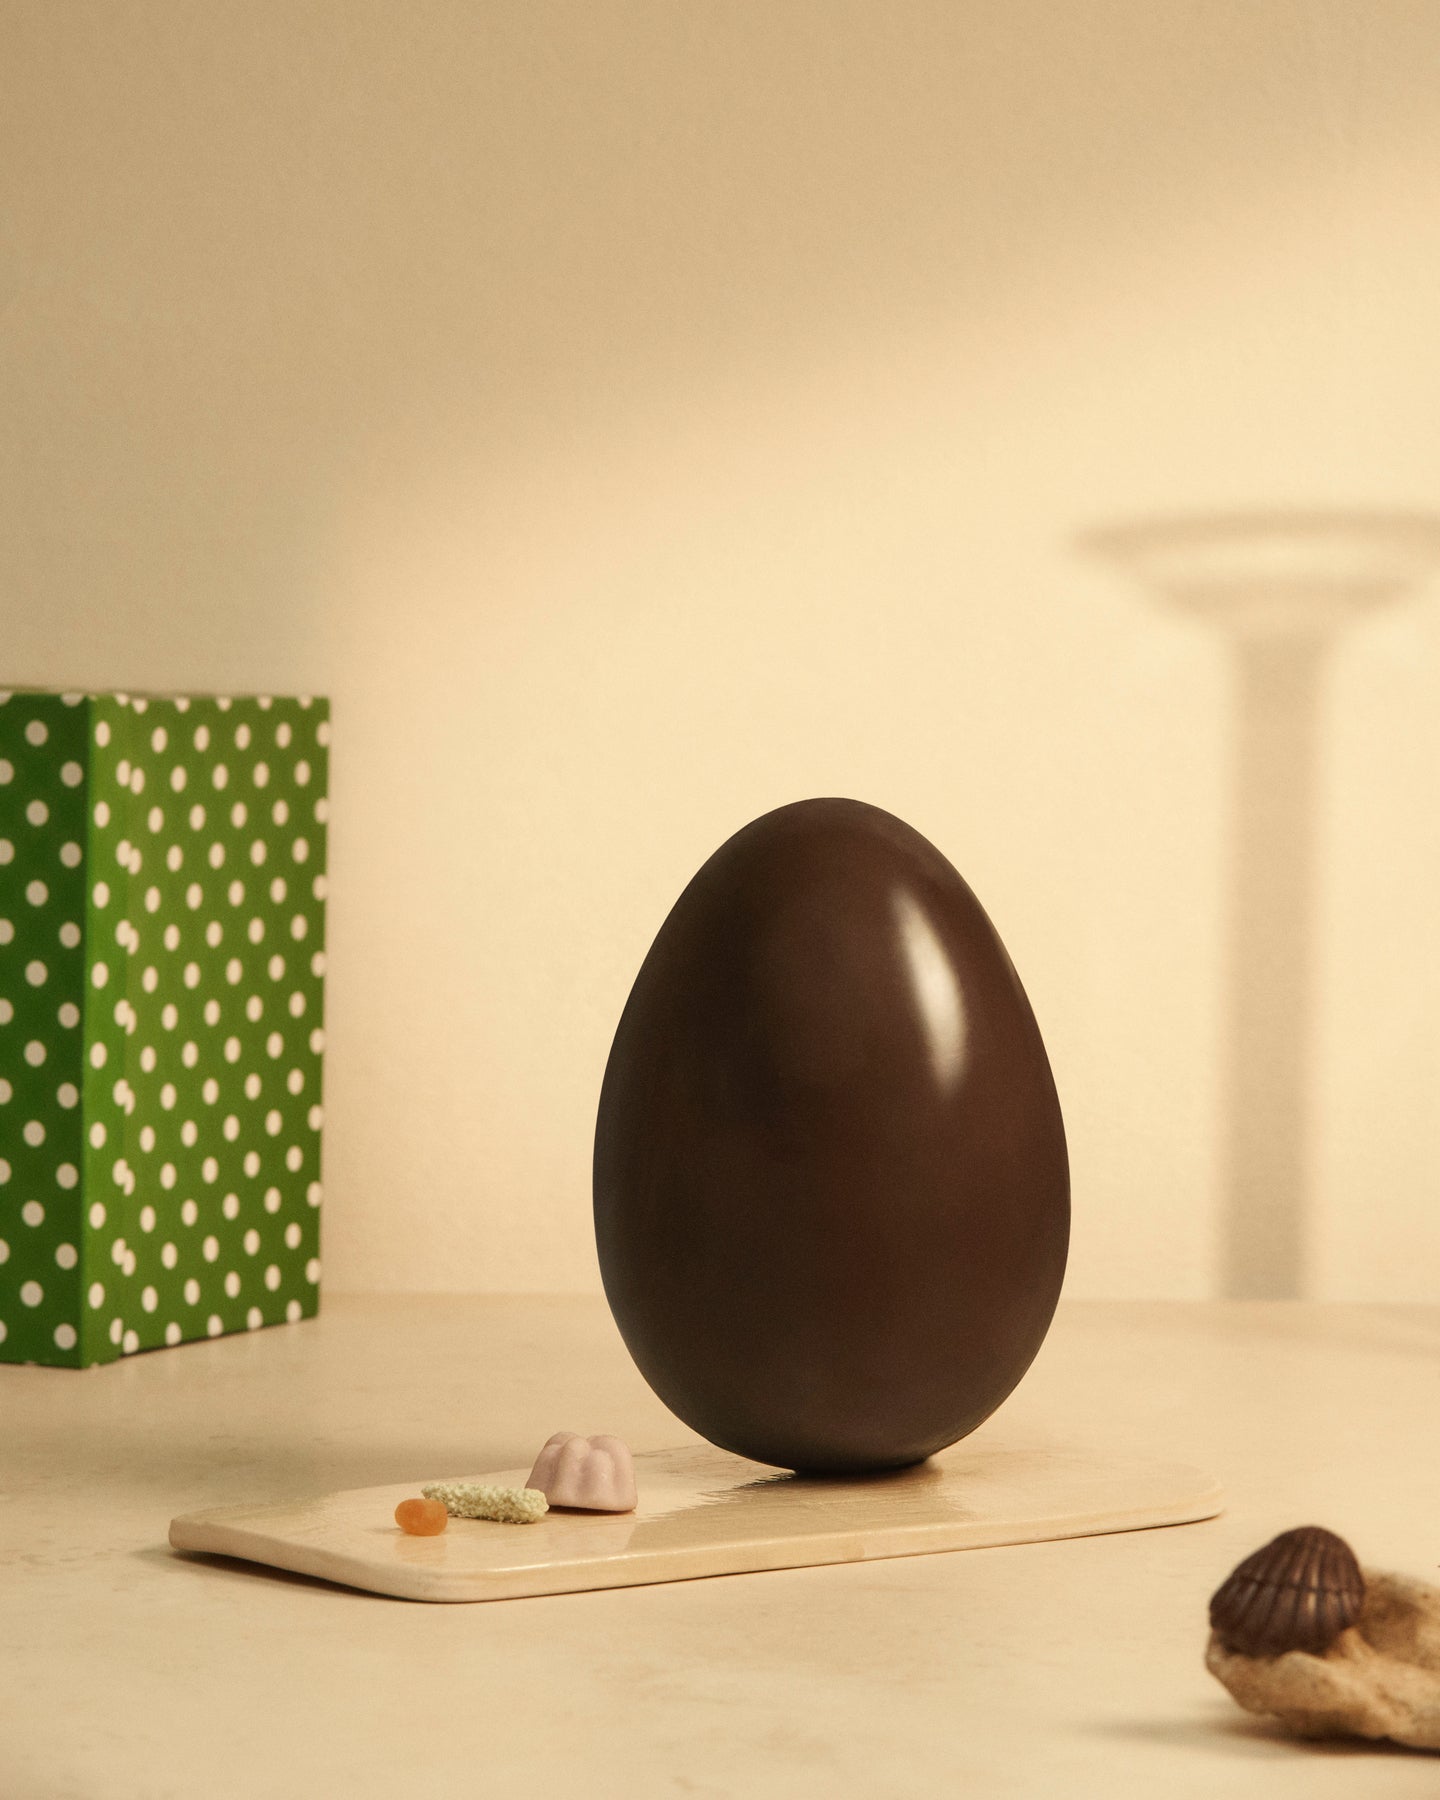 Dark Chocolate Eggs 72% with Polka Dot Box